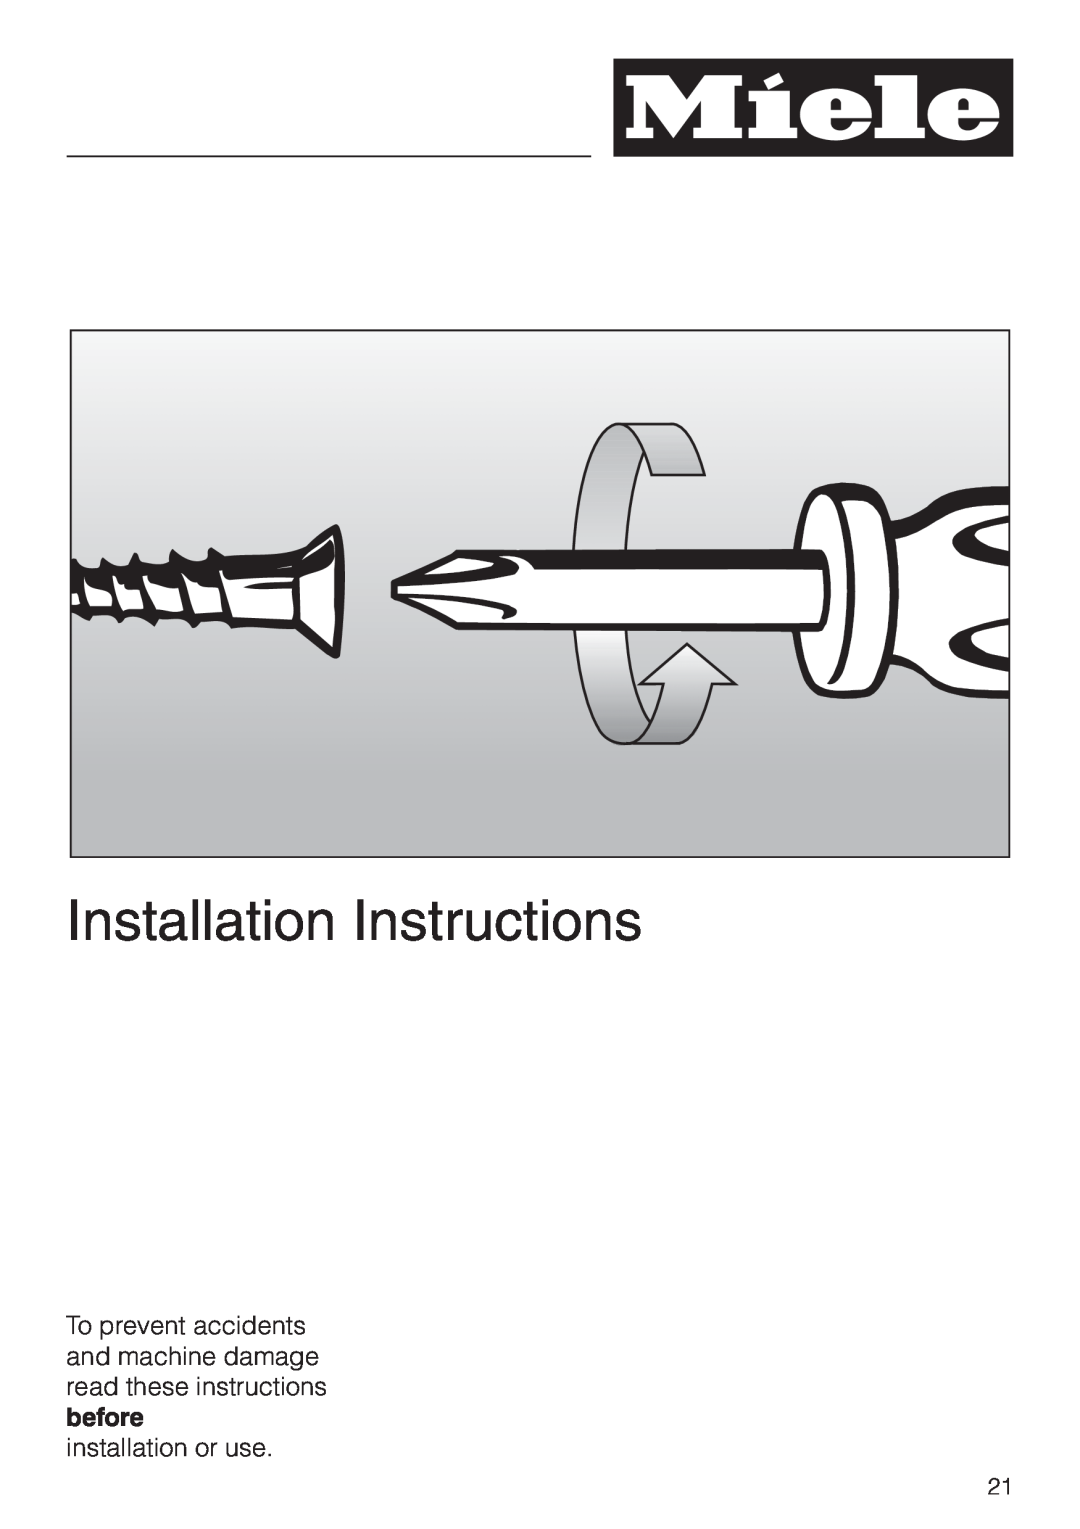 Miele KM 3475, KM 3465, KM 3464 installation instructions Installation Instructions, installation or use 